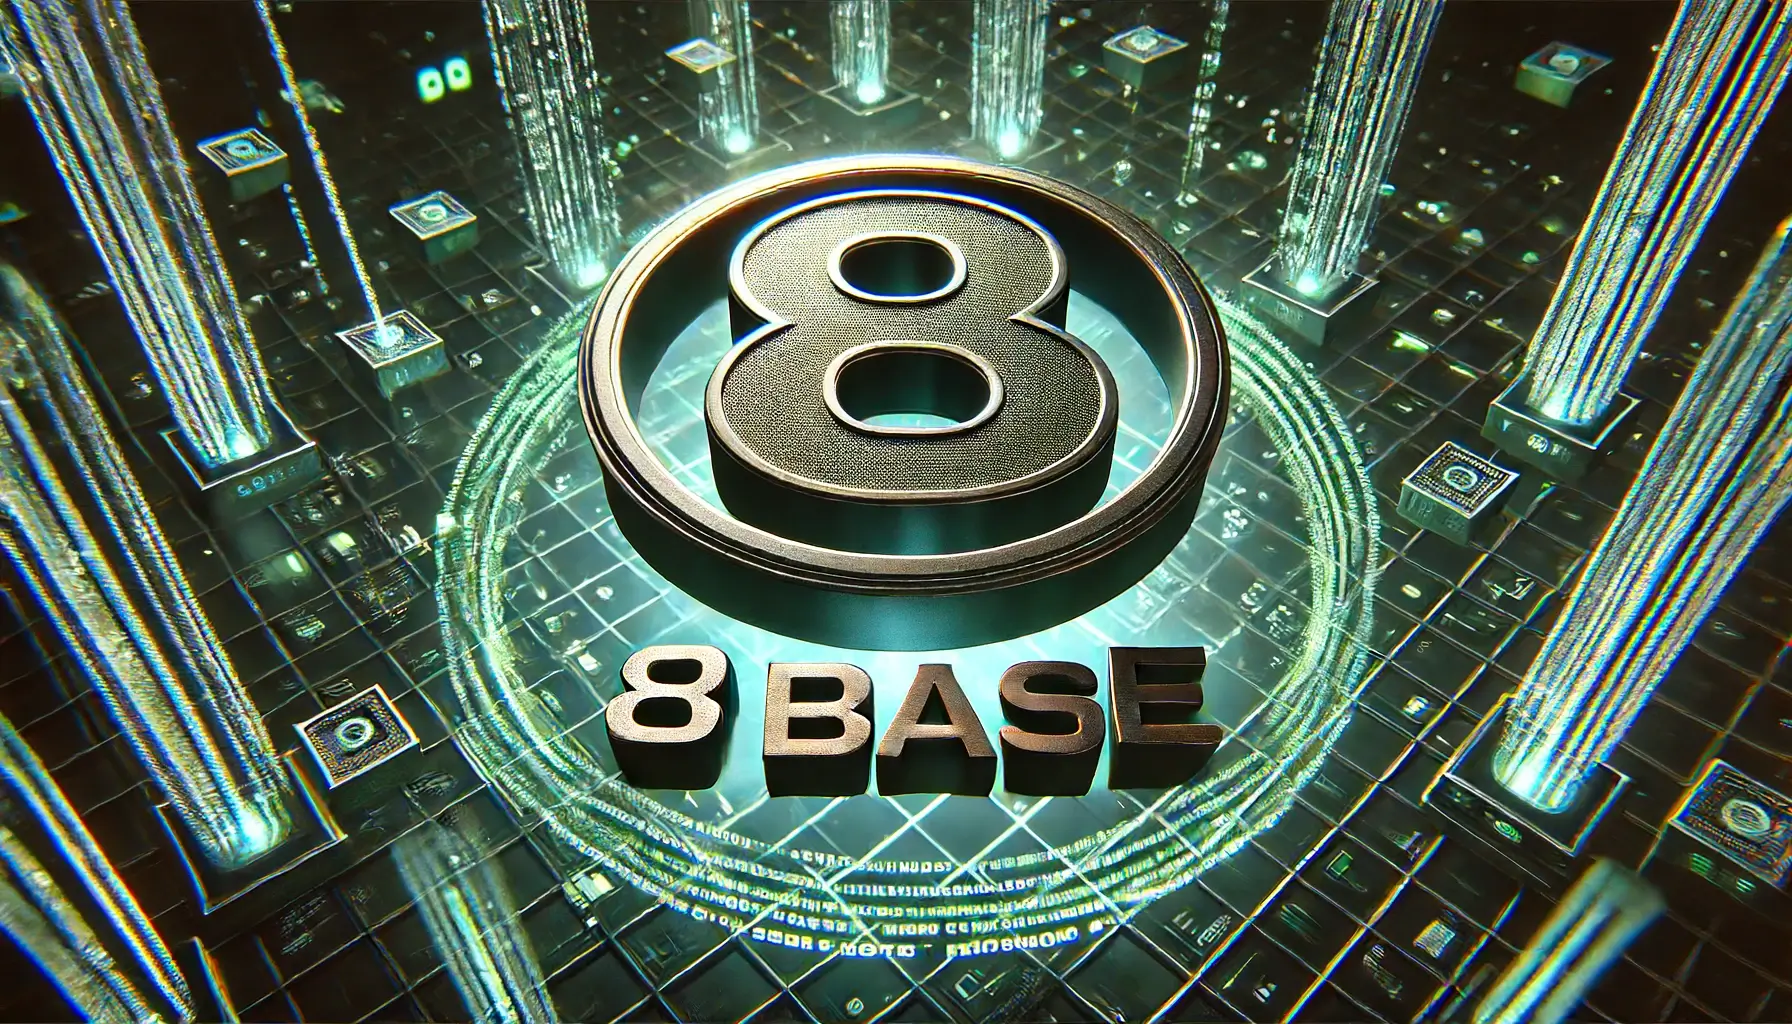 8base ransomware